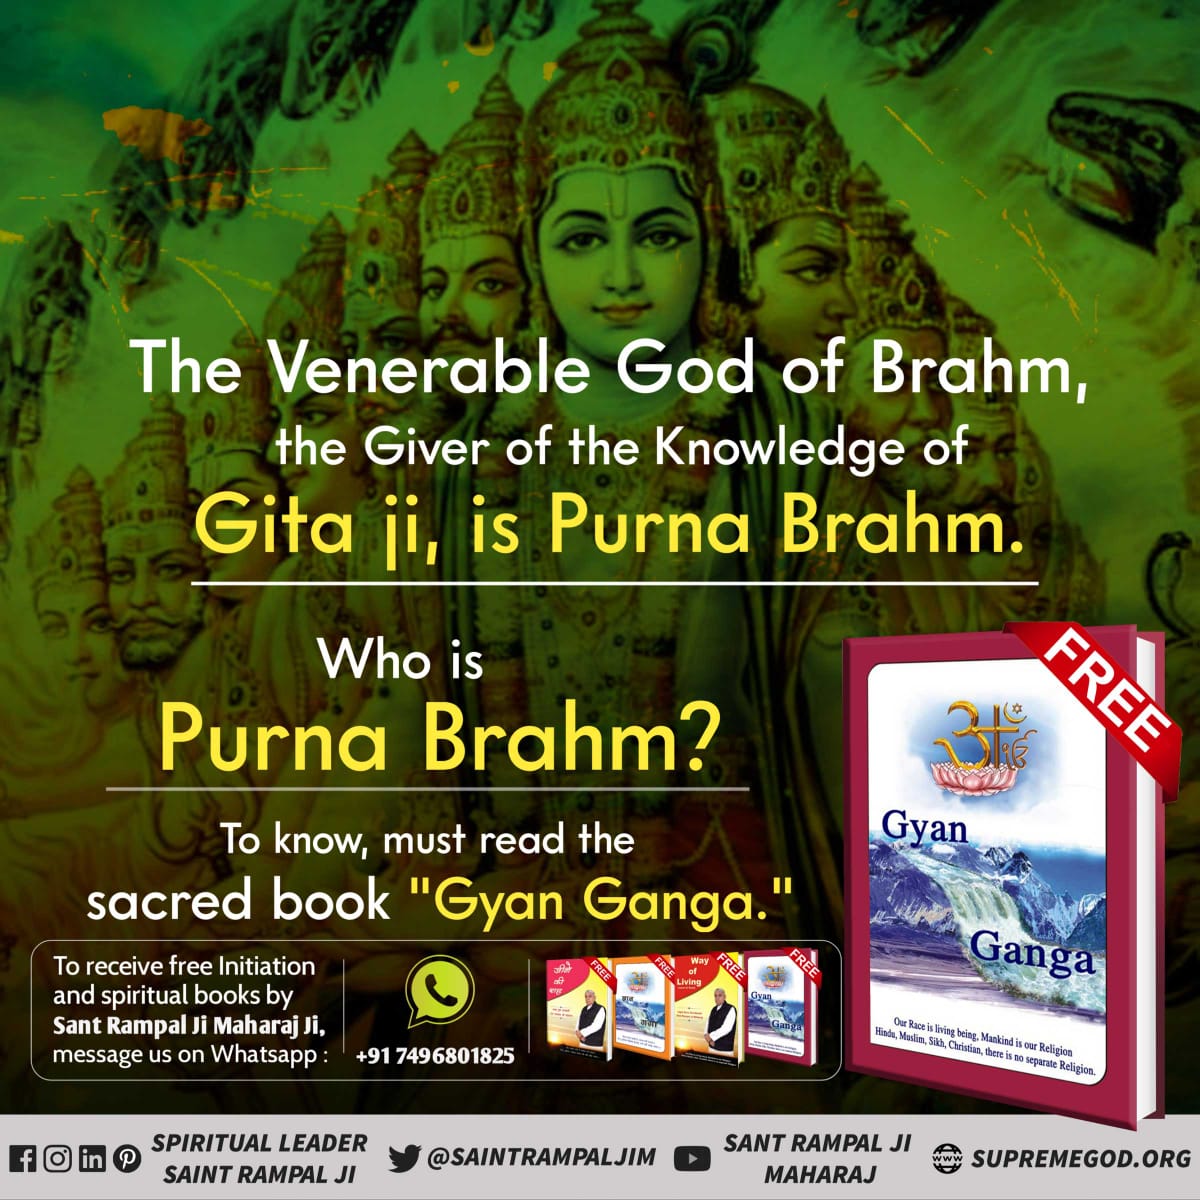 The Venerable God of Brahm, the Giver of the Knowledge of Gita ji, is Purna Brahm.
Who is Purna Brahm?
#GodMorningFriday
#ऐसे_सुख_देता_है_भगवान
To know, must read sacred book 'Gyan Ganga.'